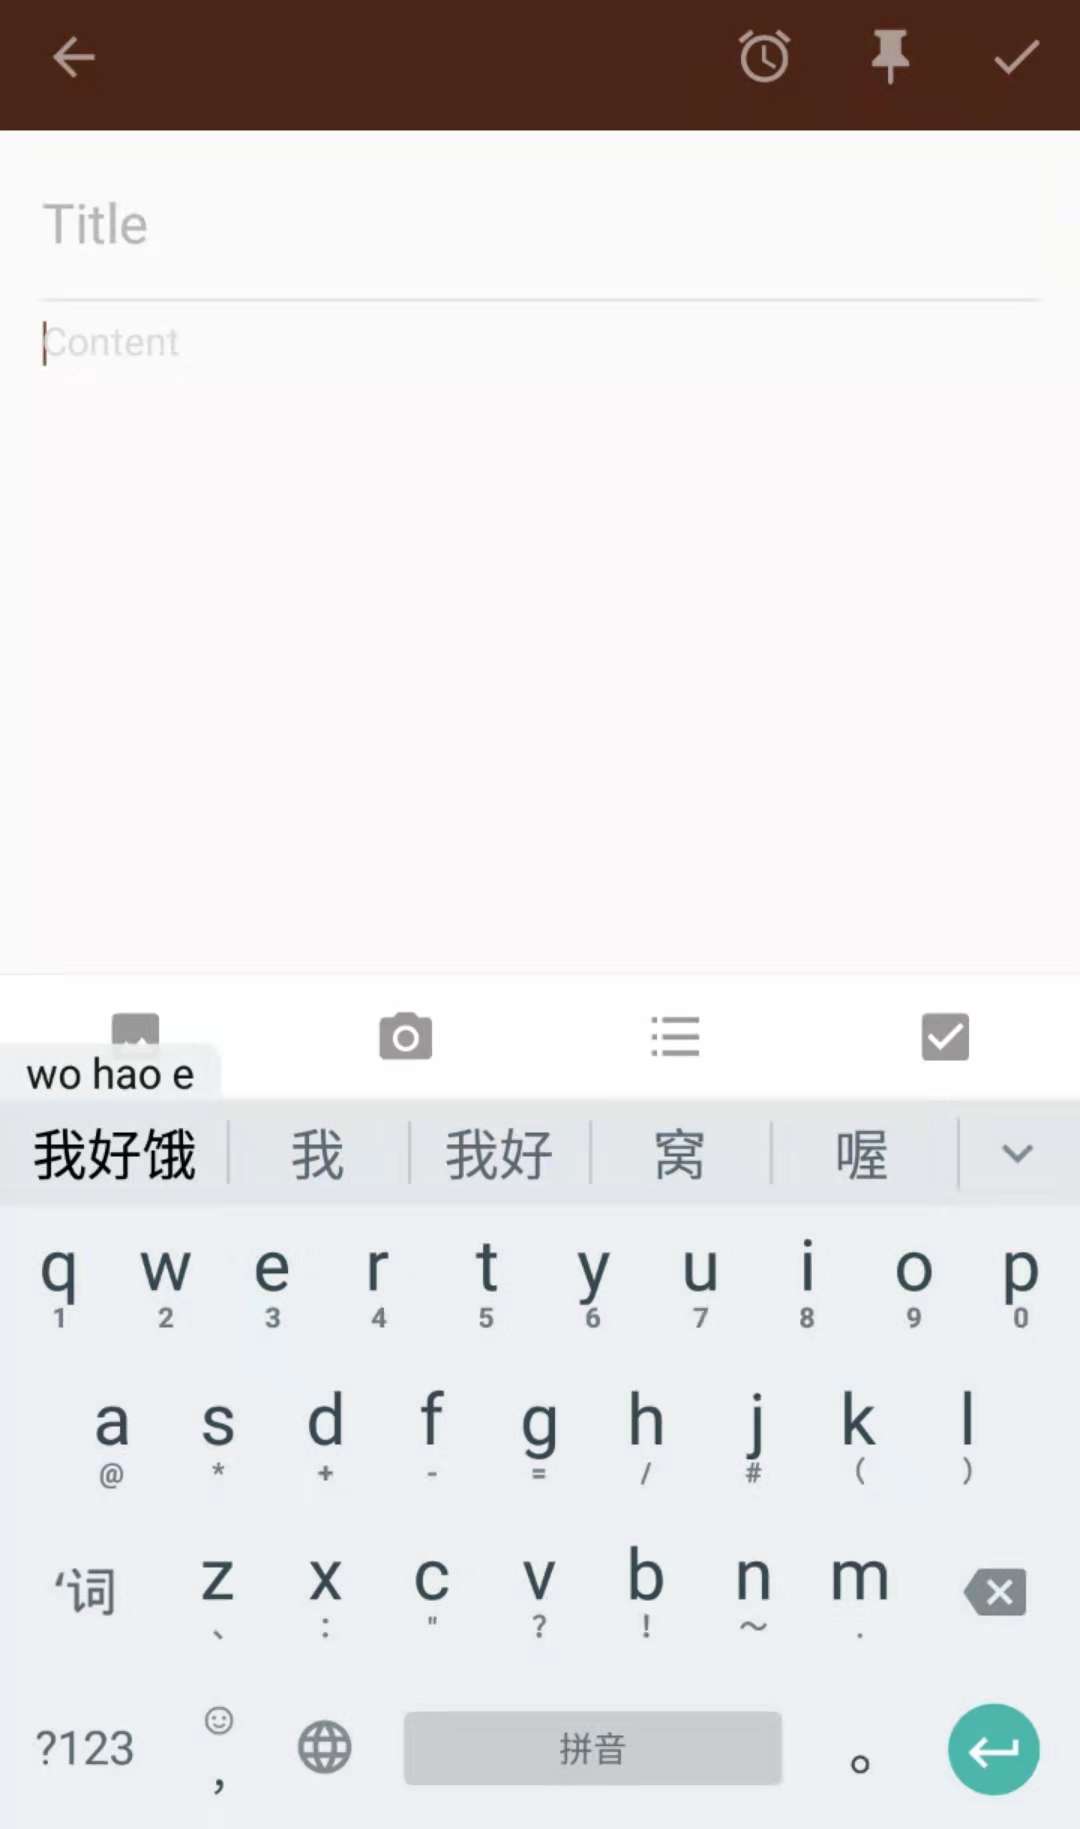 Chinese Keyboard: Using the Pinyin input method